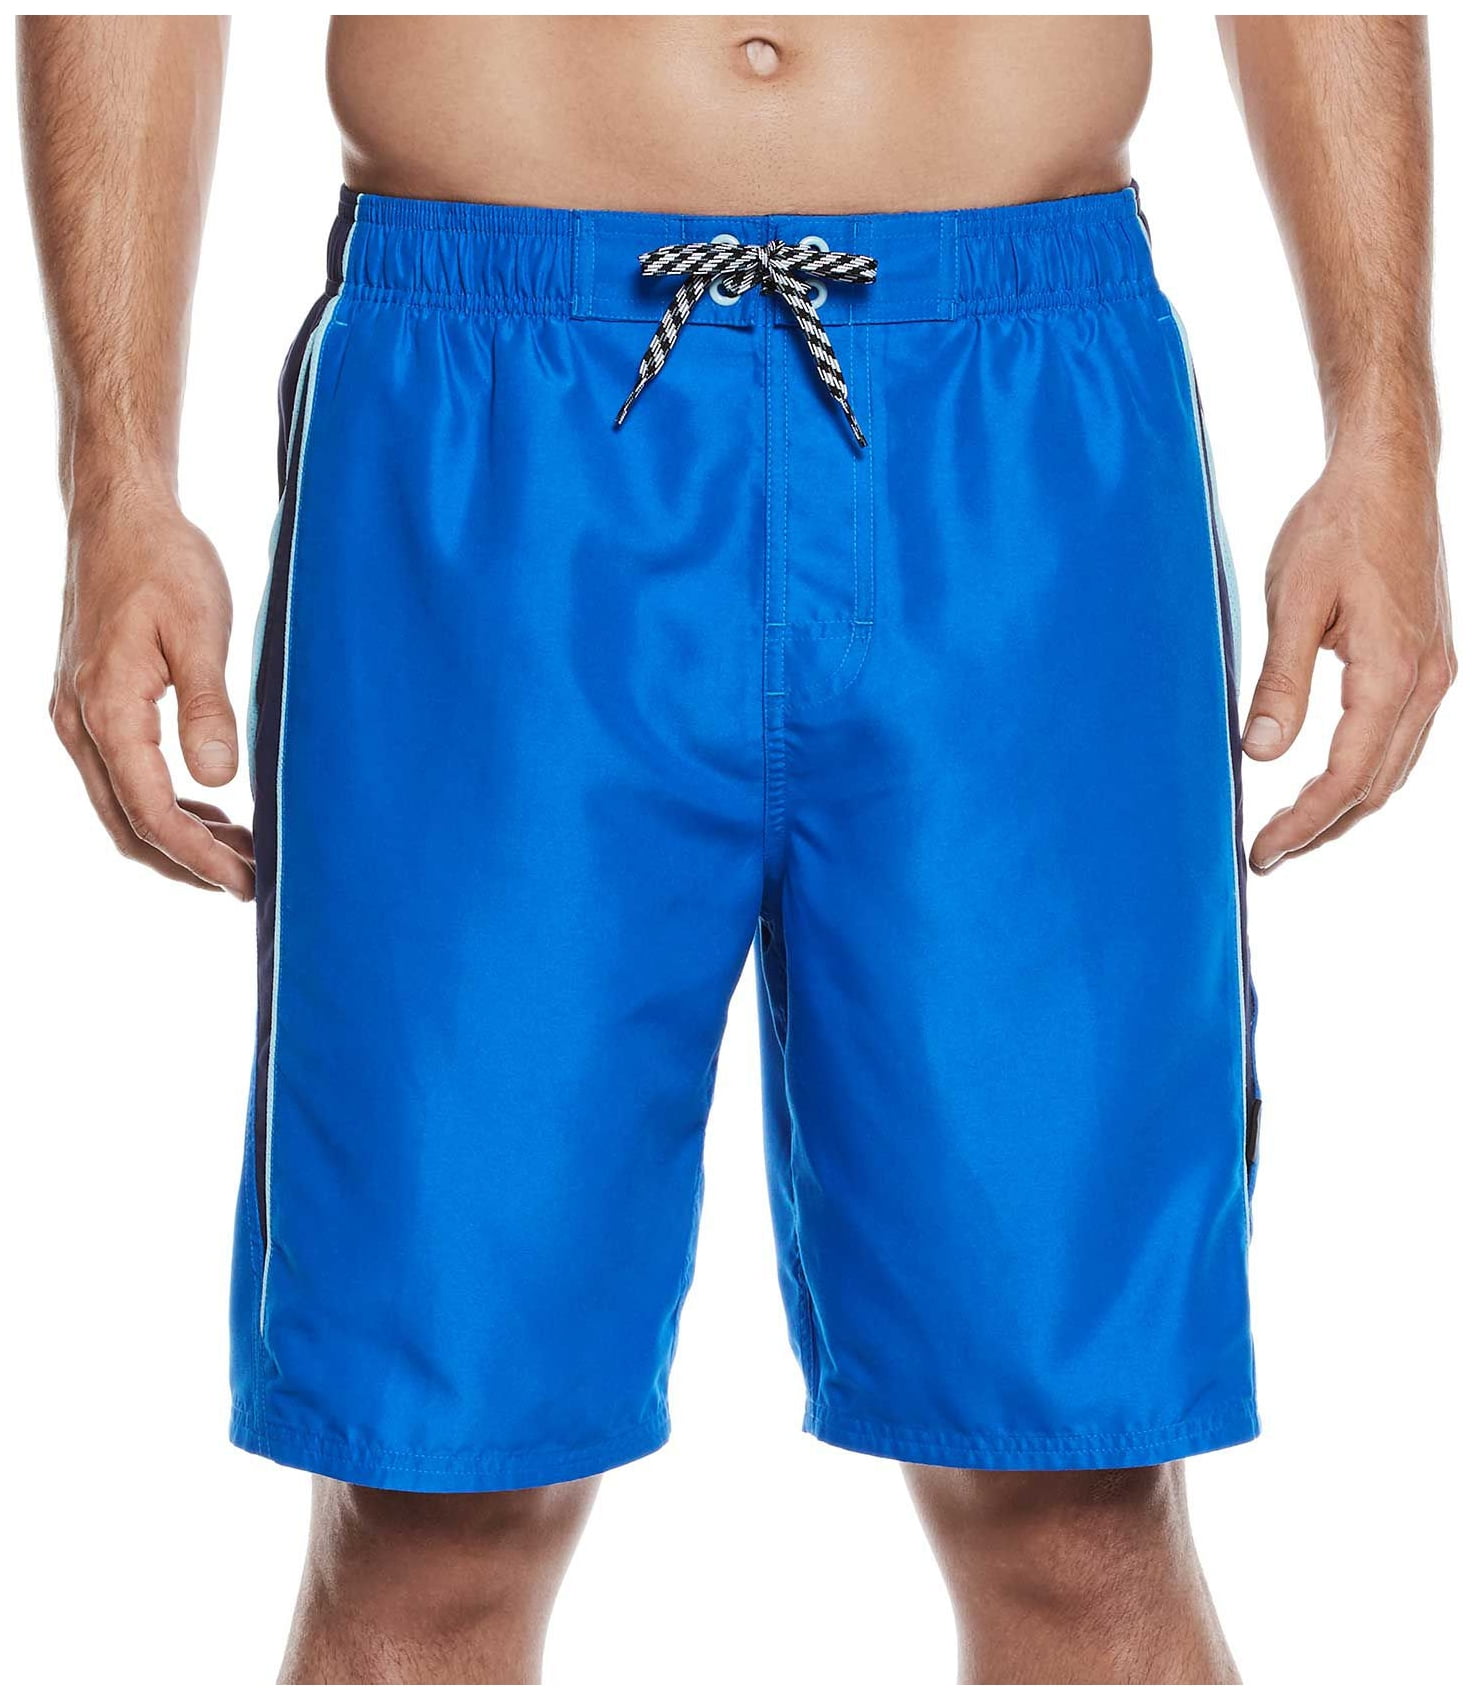 nike men's core contend board shorts